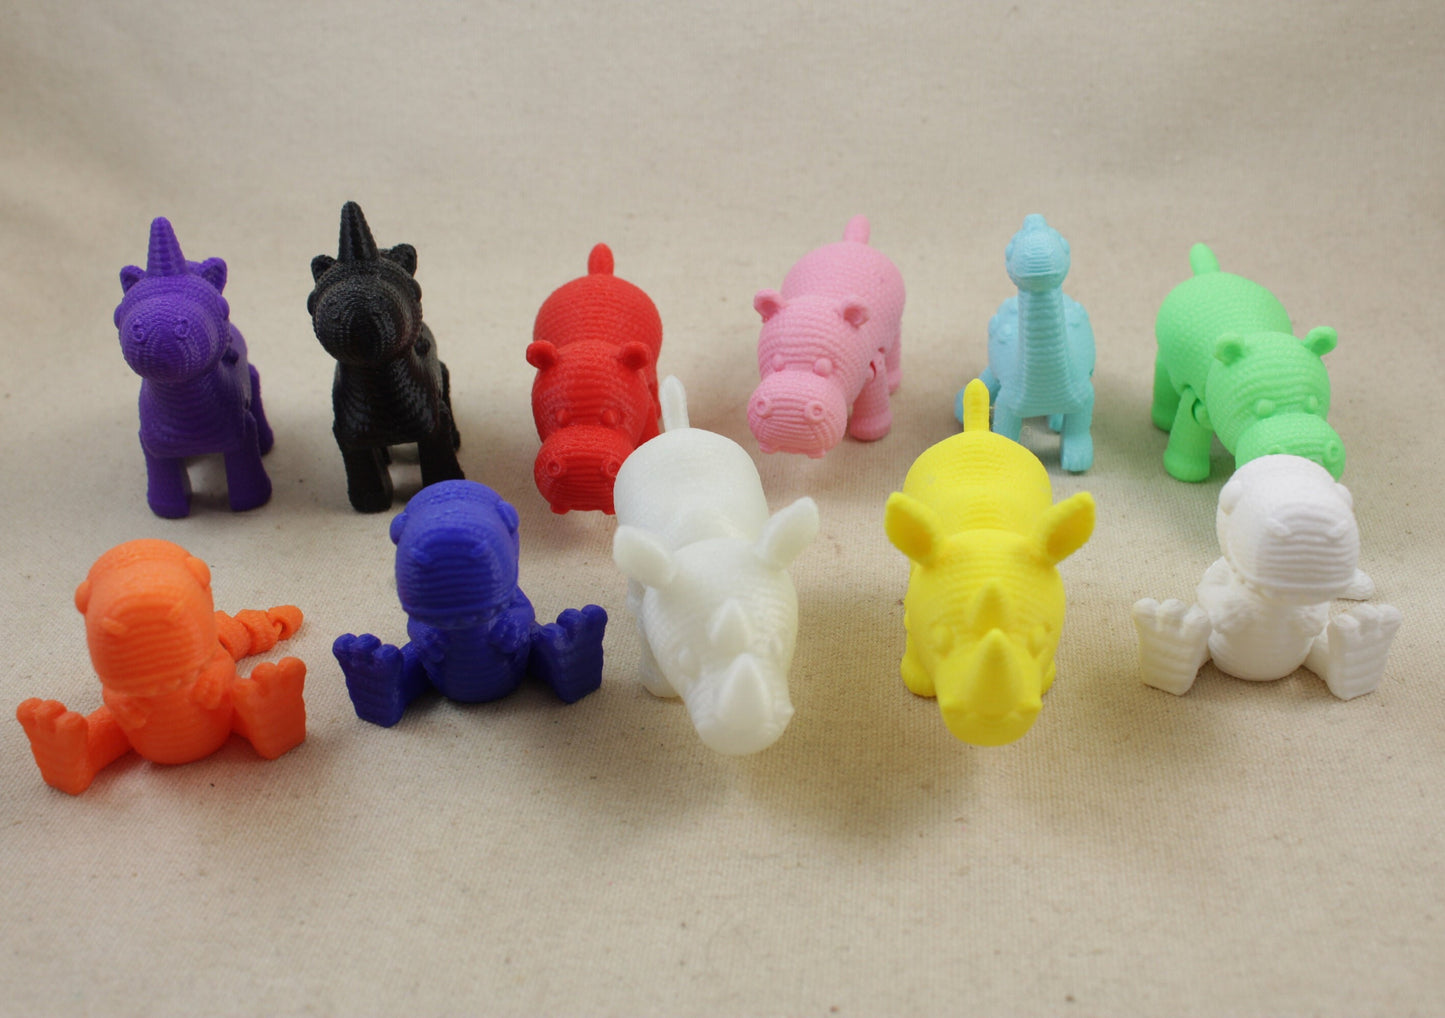 Hippopotamus 3D Printed Crochet Textured Toy